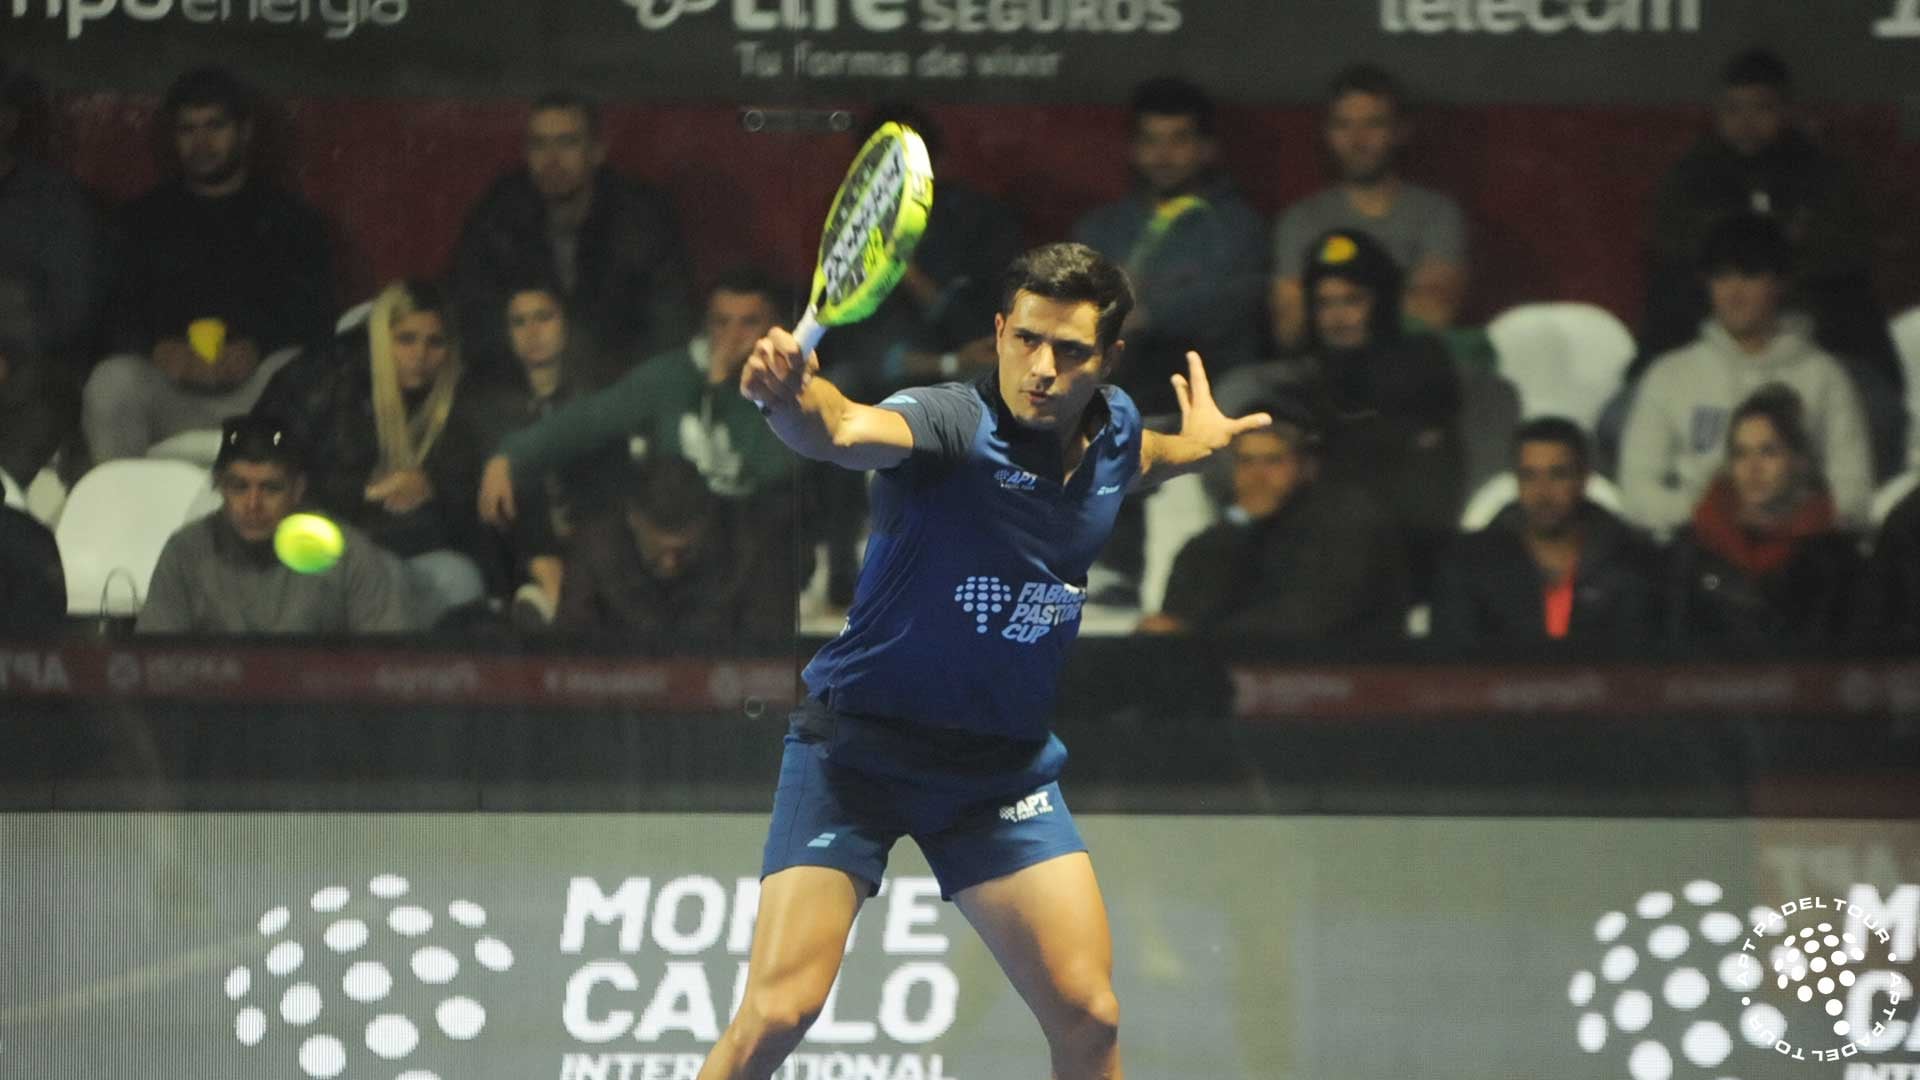 Yain Melgratti revés APT Buenos Aires masters 2022